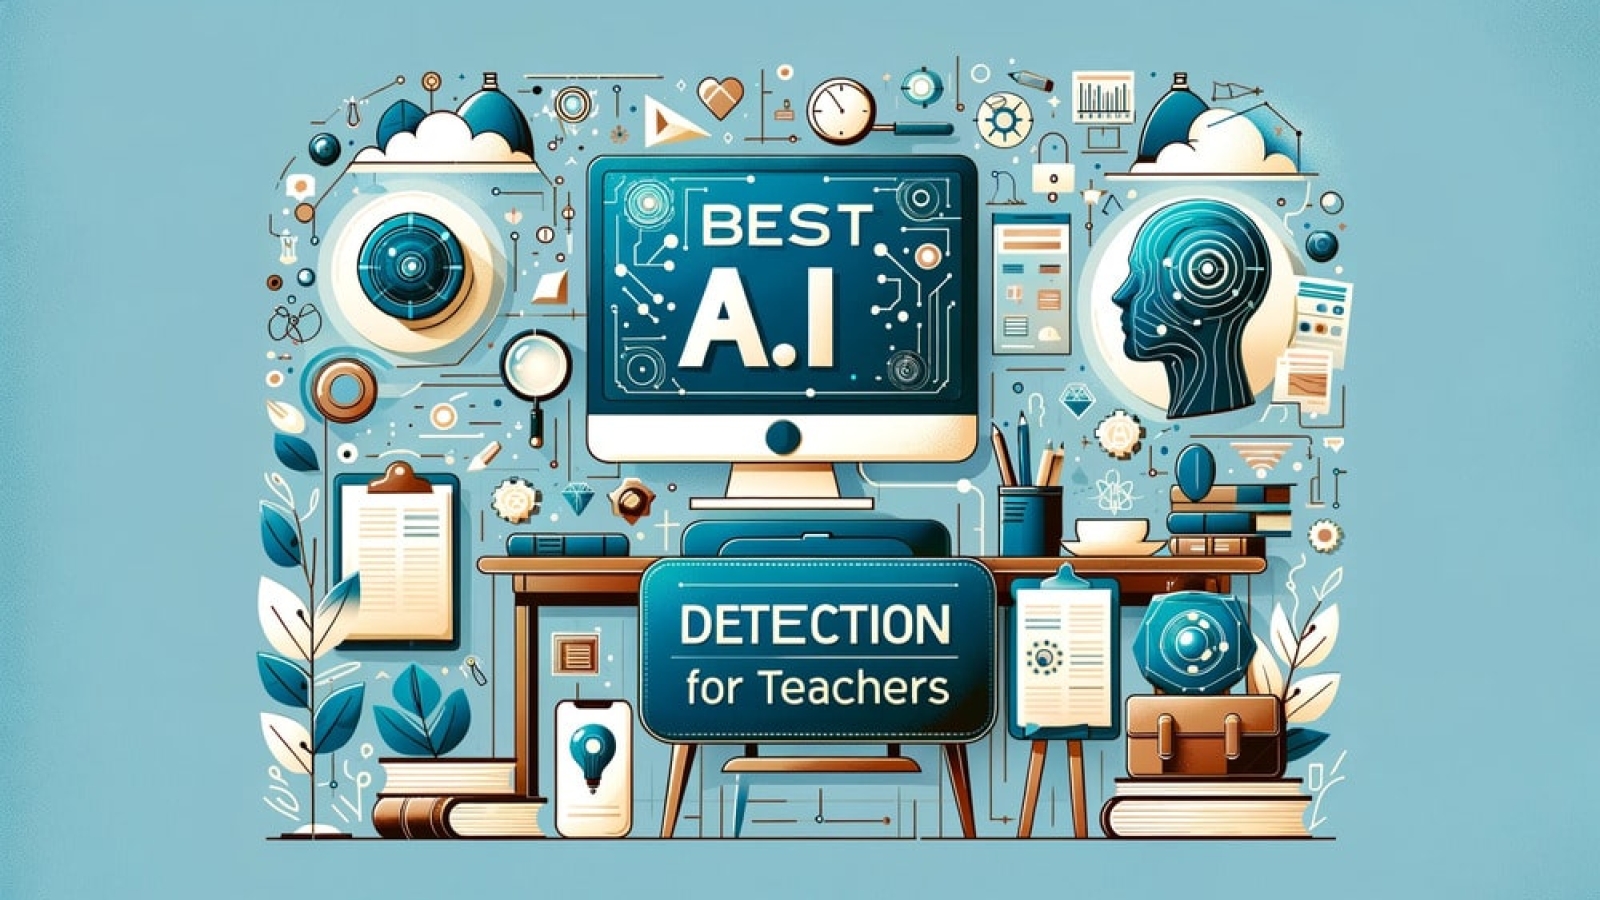 Best AI Detection for Teachers